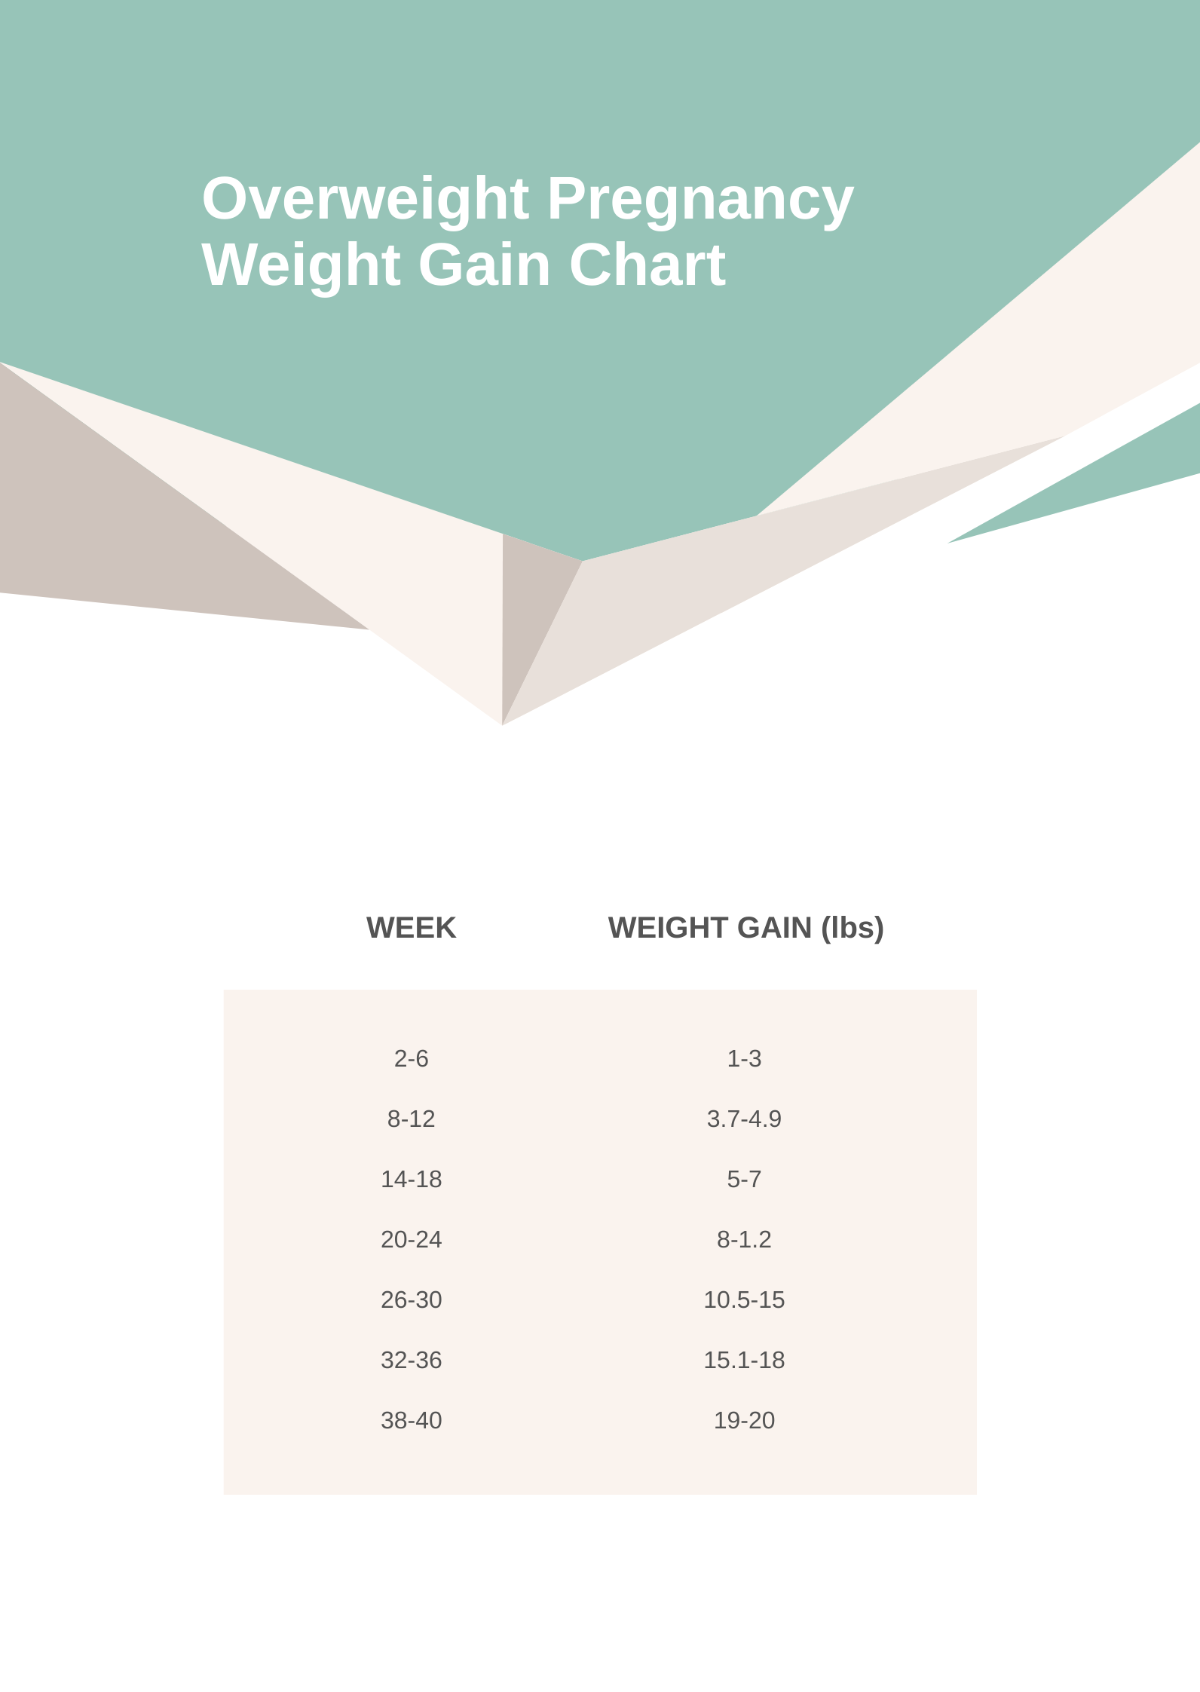 Overweight Pregnancy Weight Gain Chart